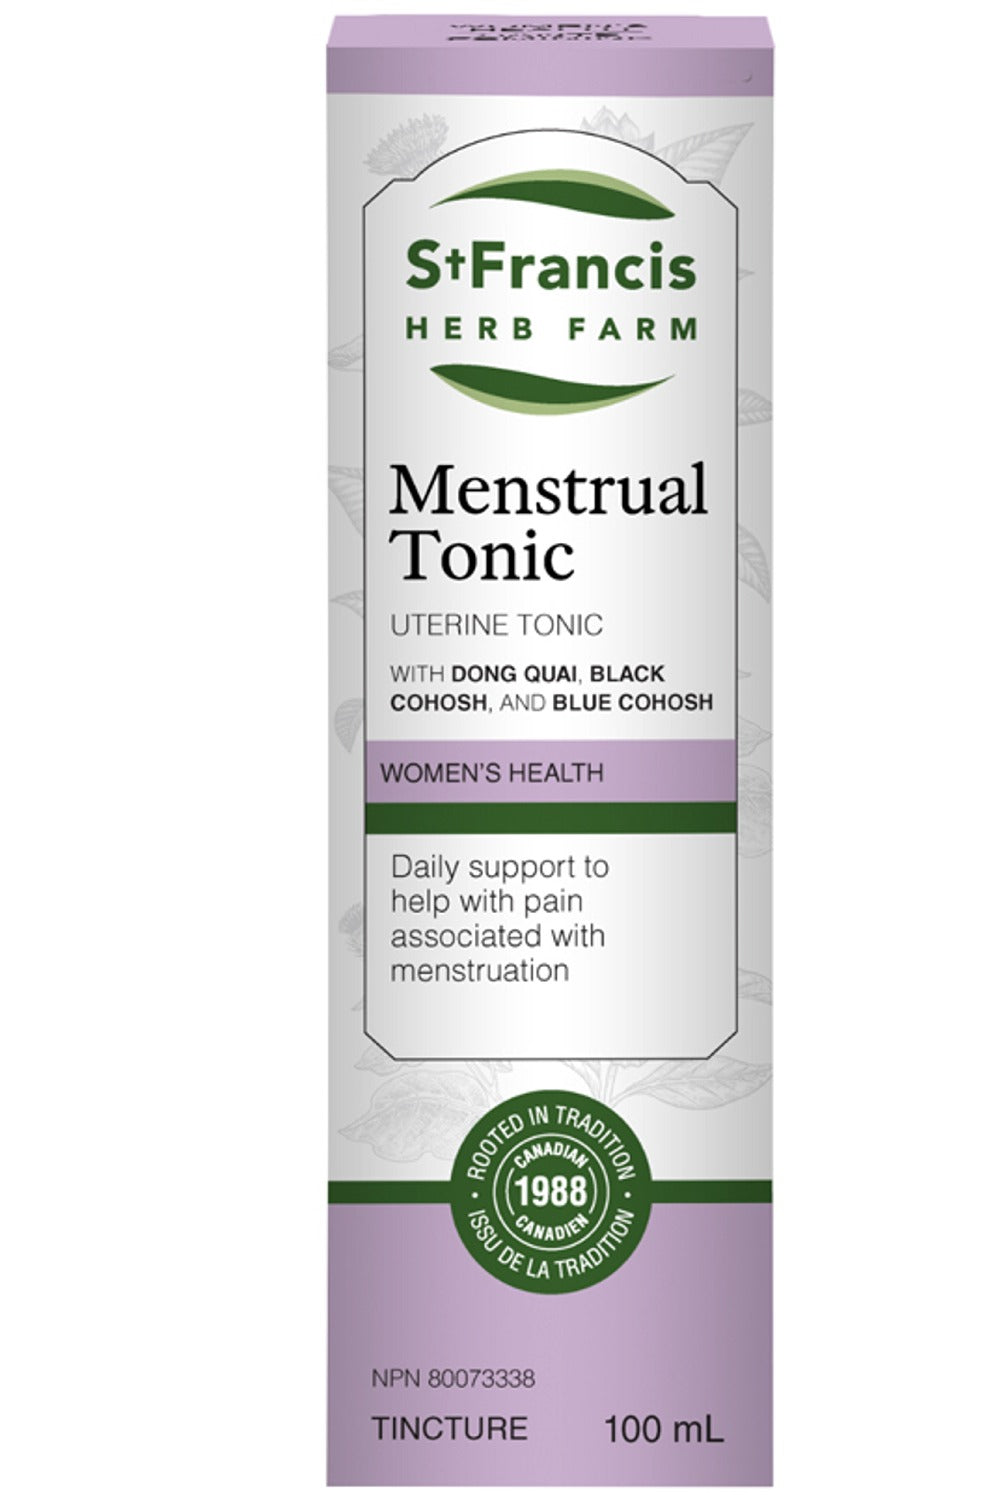 ST FRANCIS HERB FARM Menstrual Tonic (100 ml)